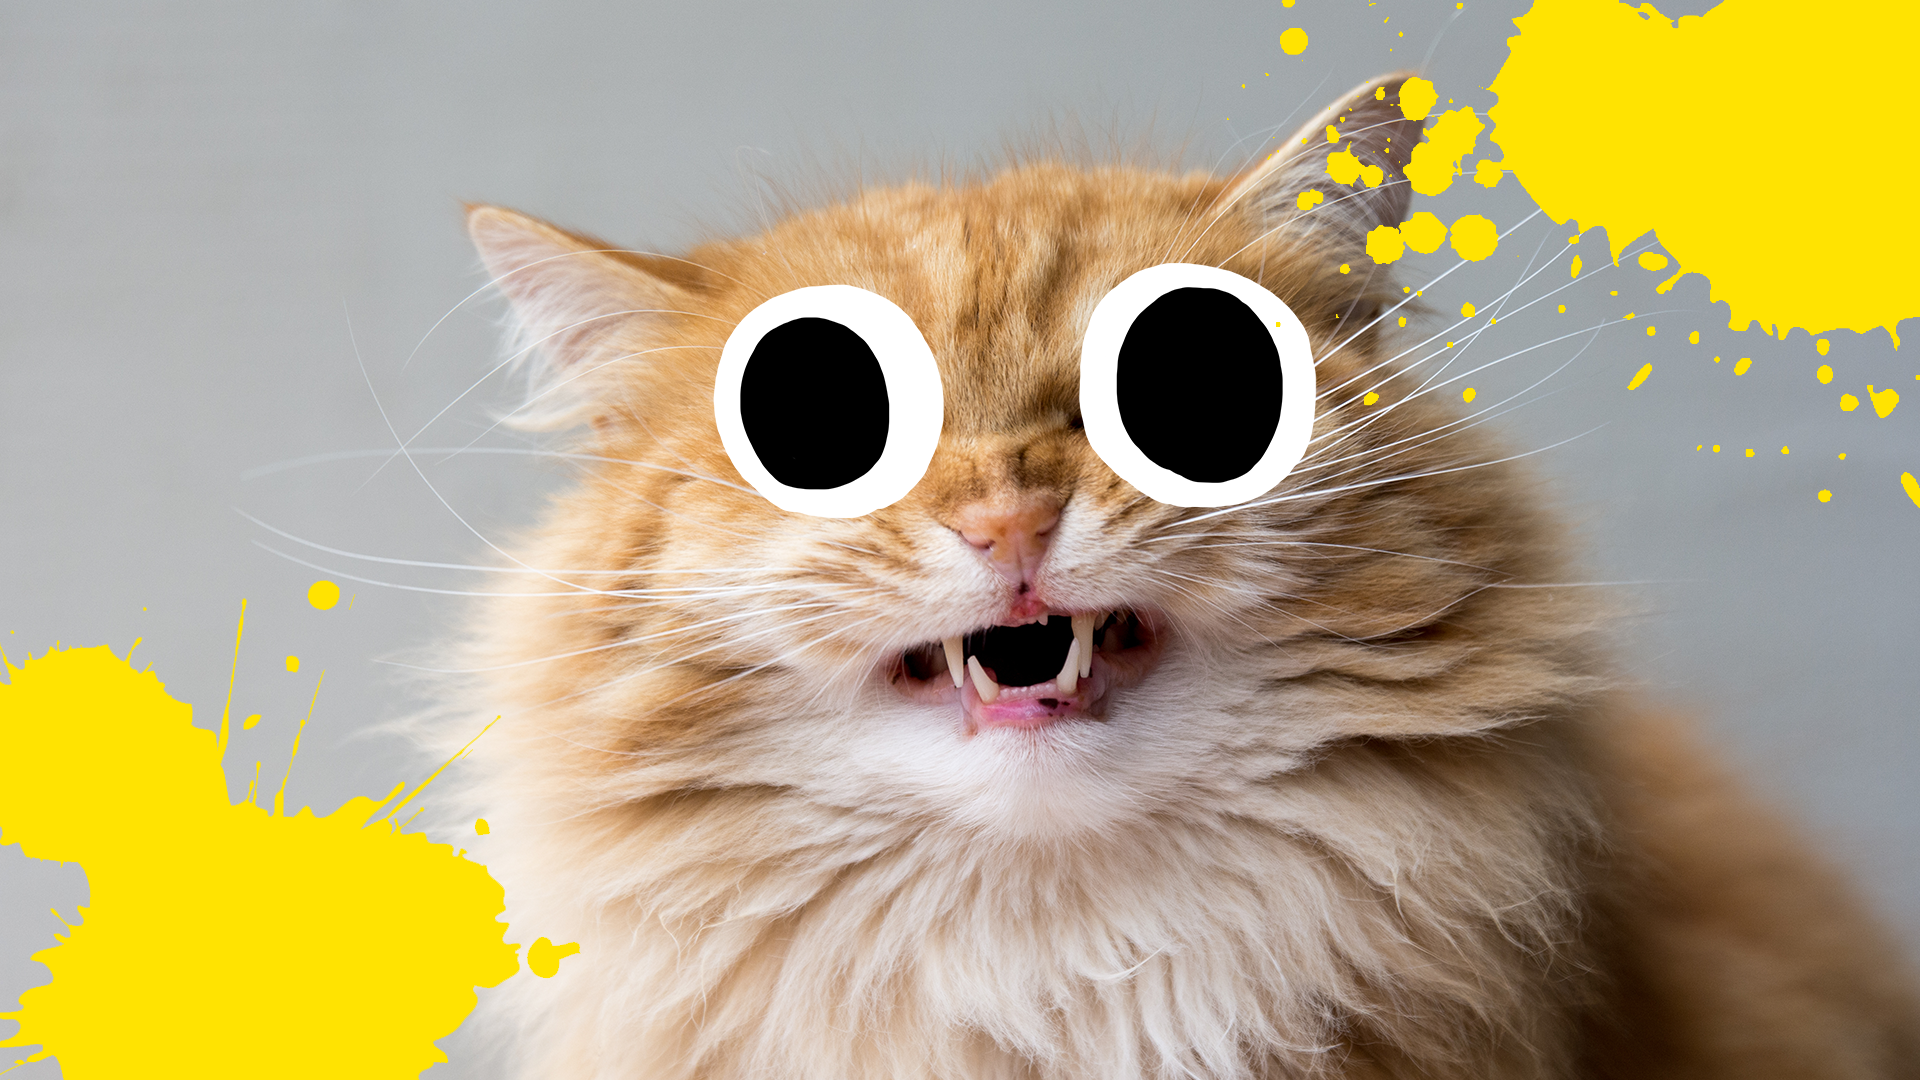 Goofy cat with yellow splats